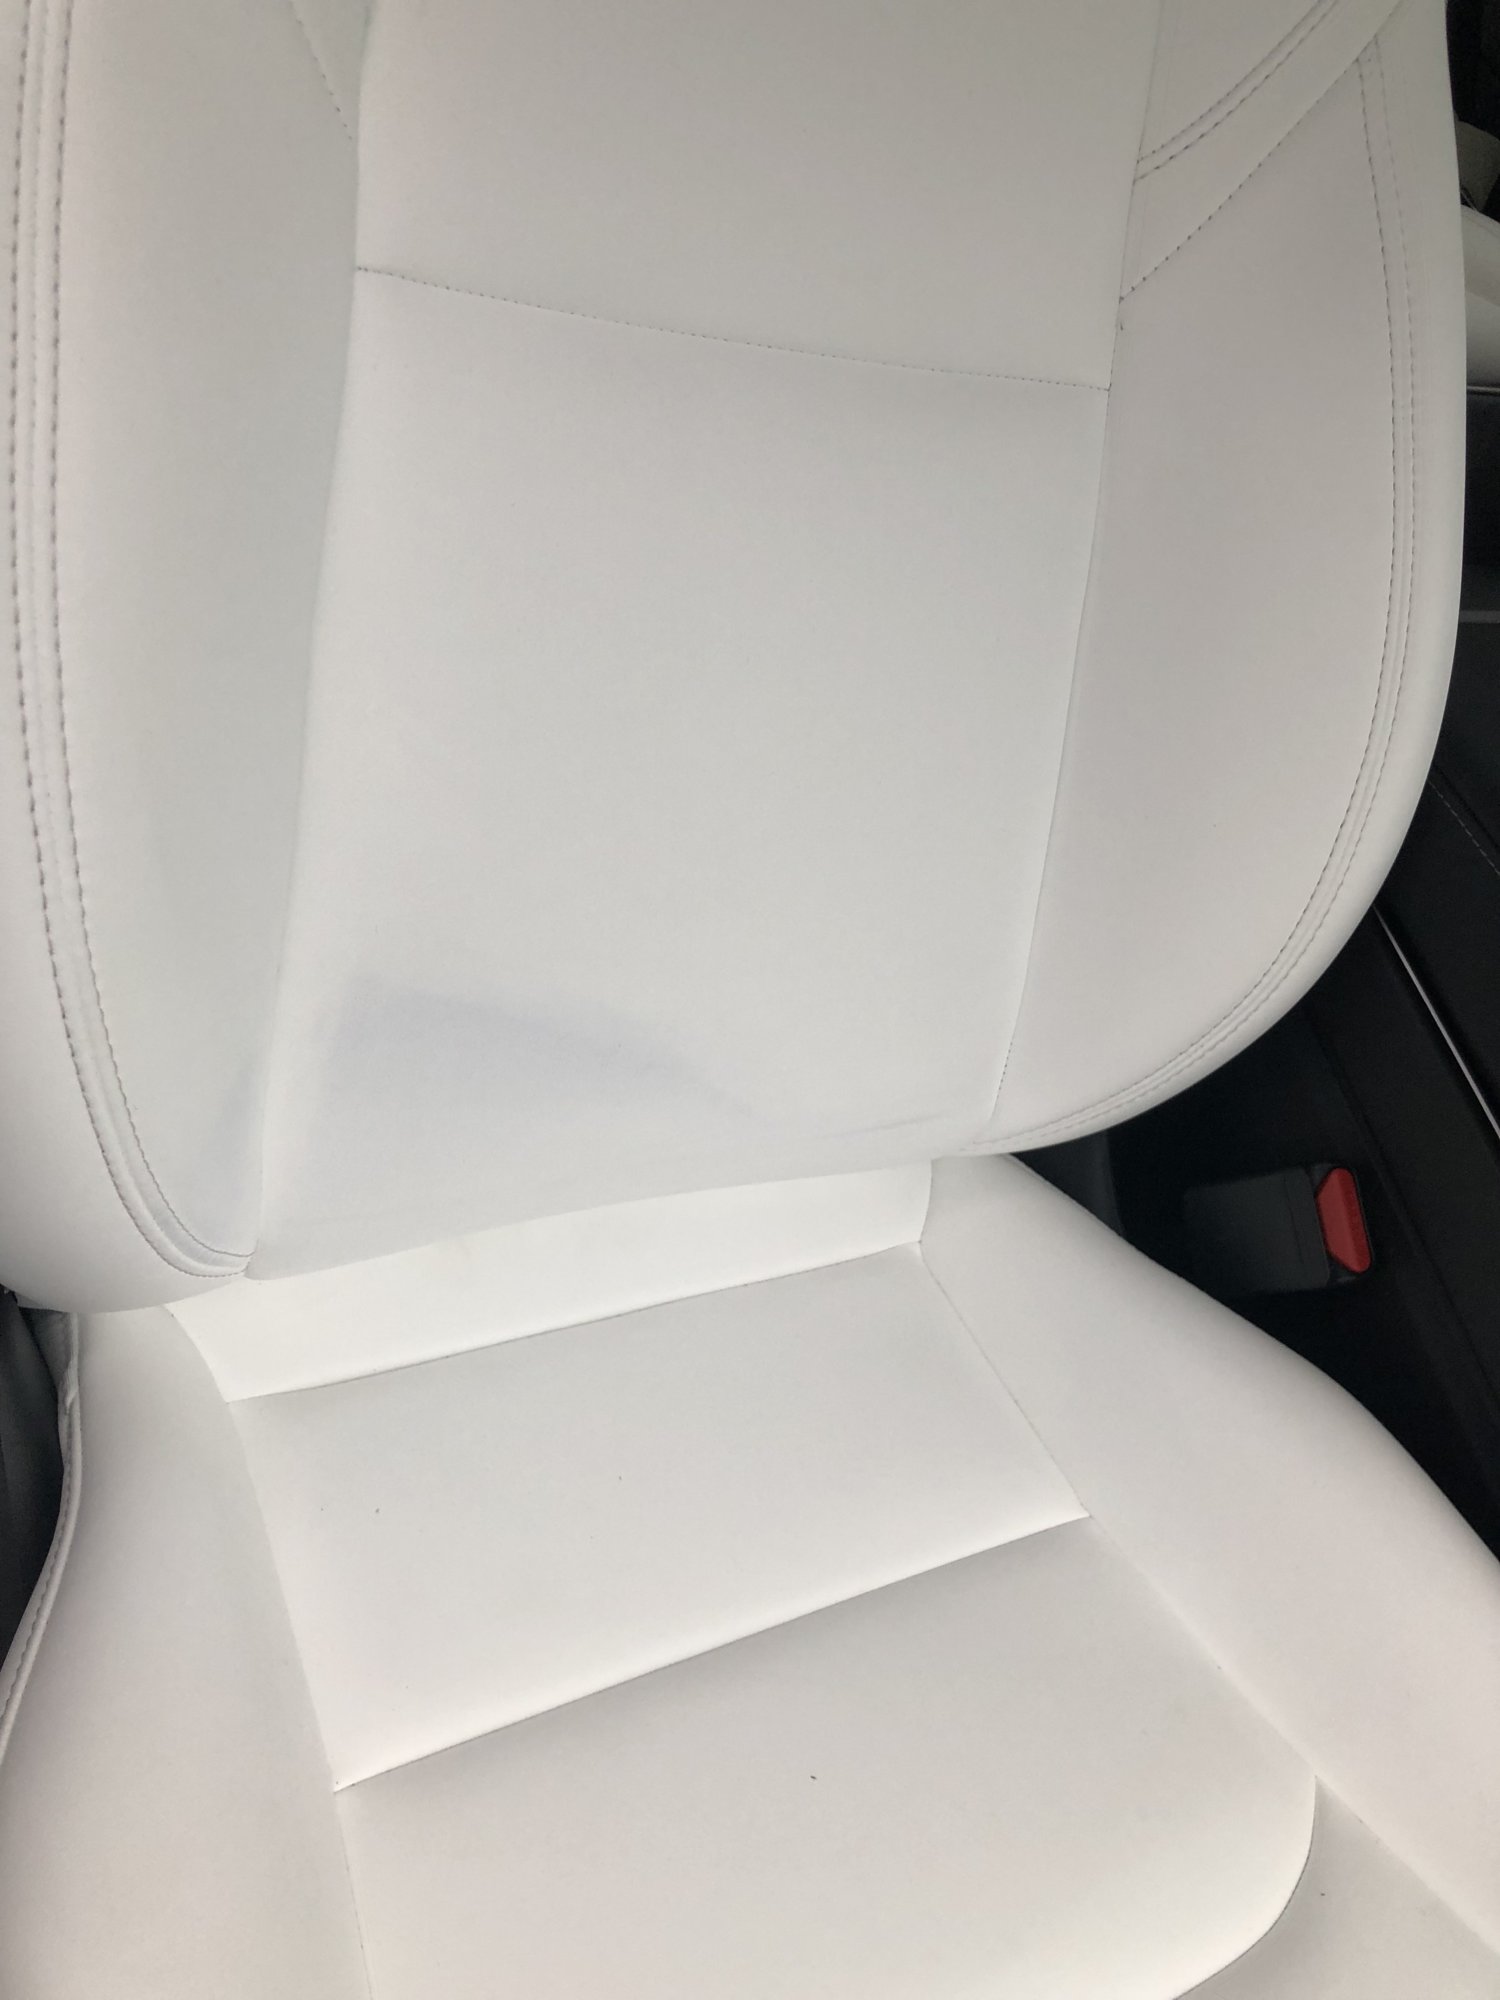 Stain on my ultra white seat! | Tesla Motors Club